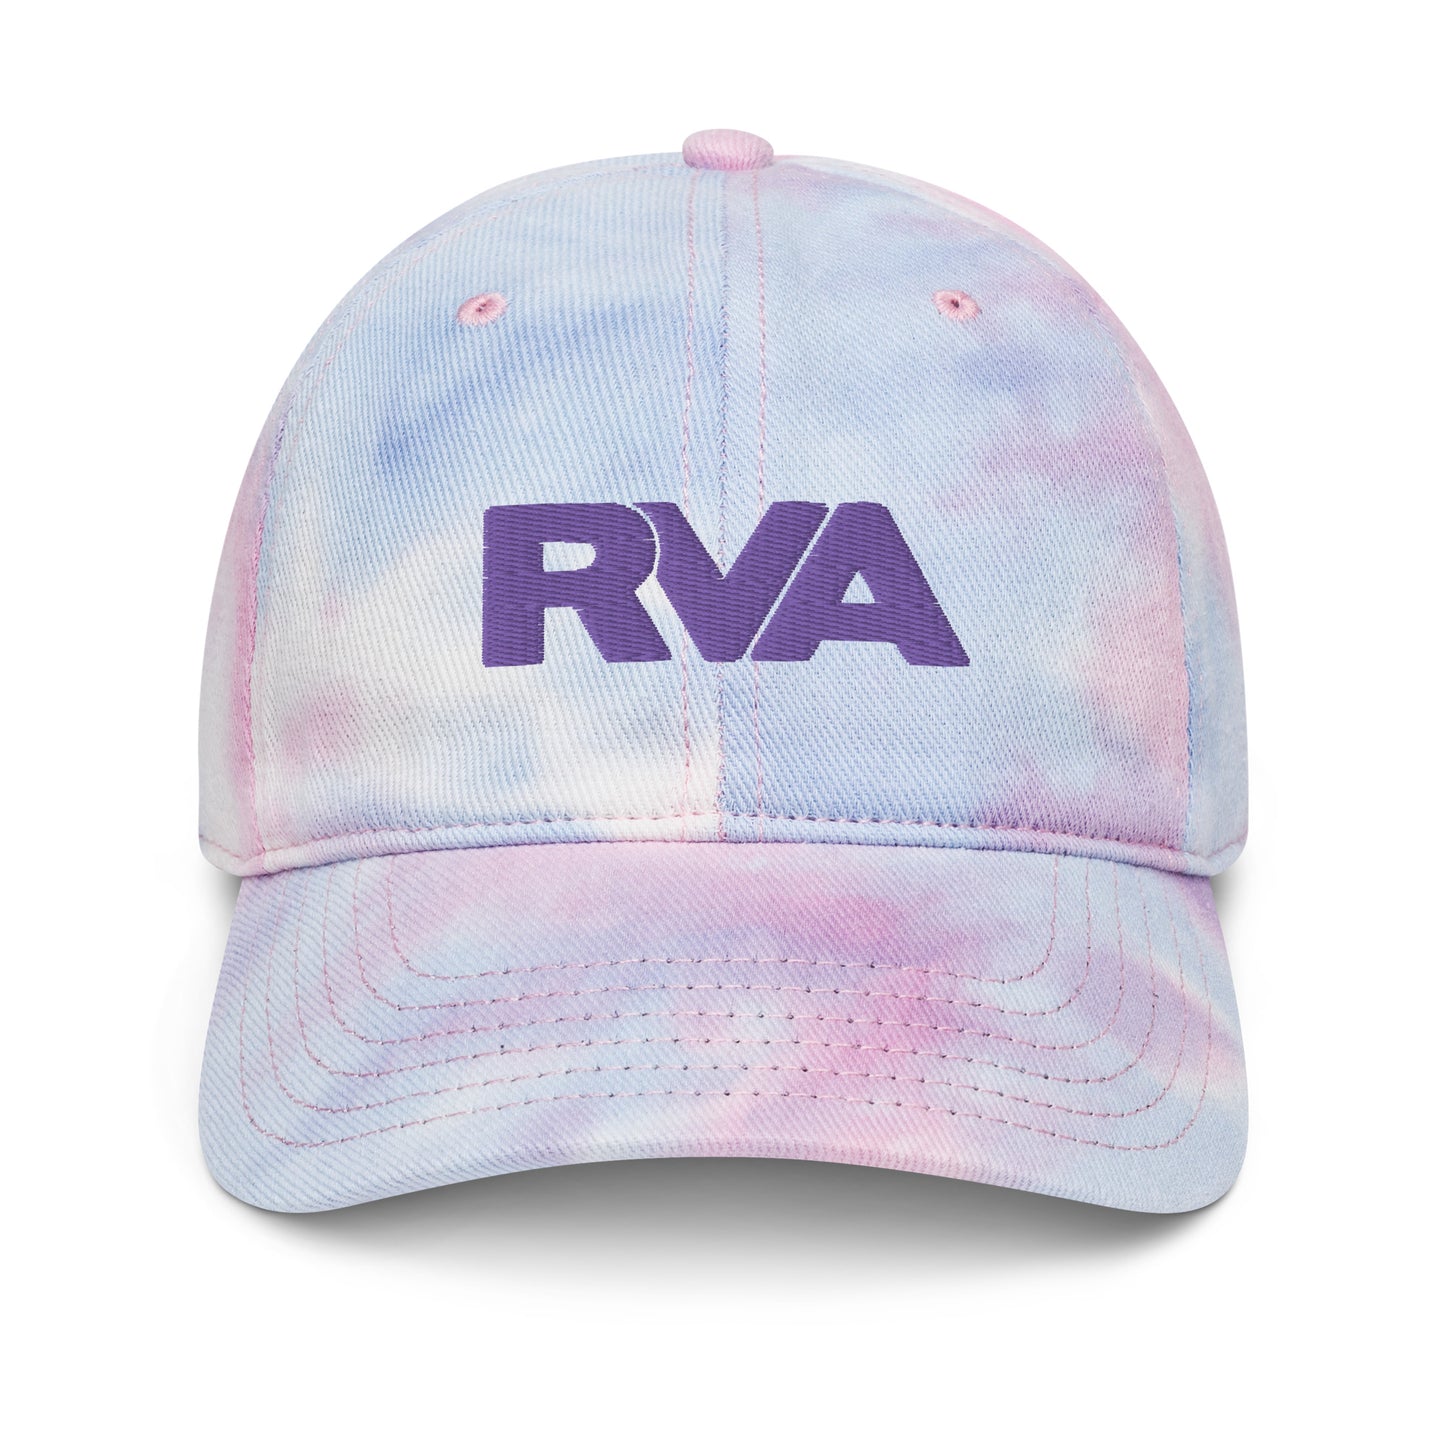 RVA / Richmond VA / Baseball Cap / Pink Blue Purple